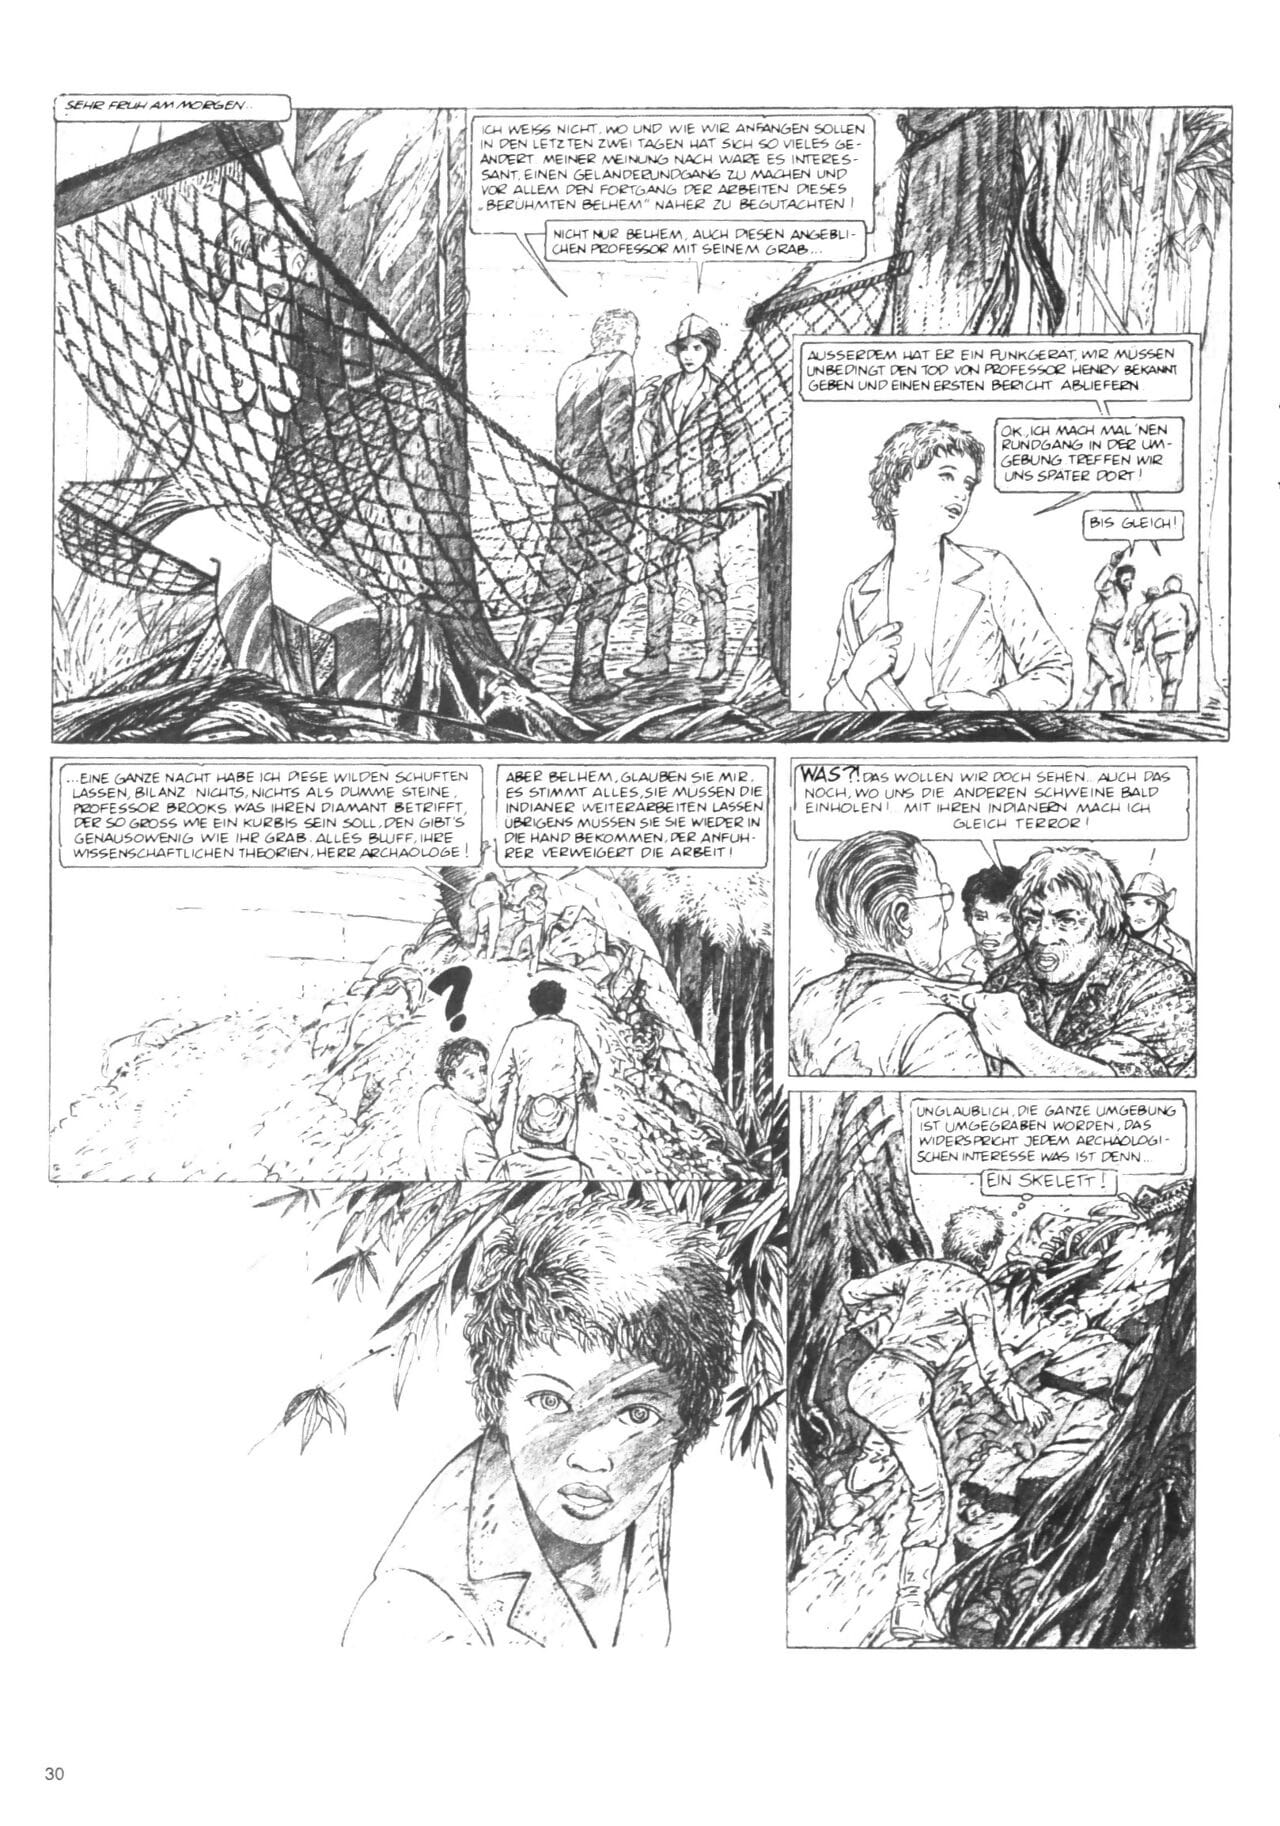 schwermetall #070 PART 2 page 1